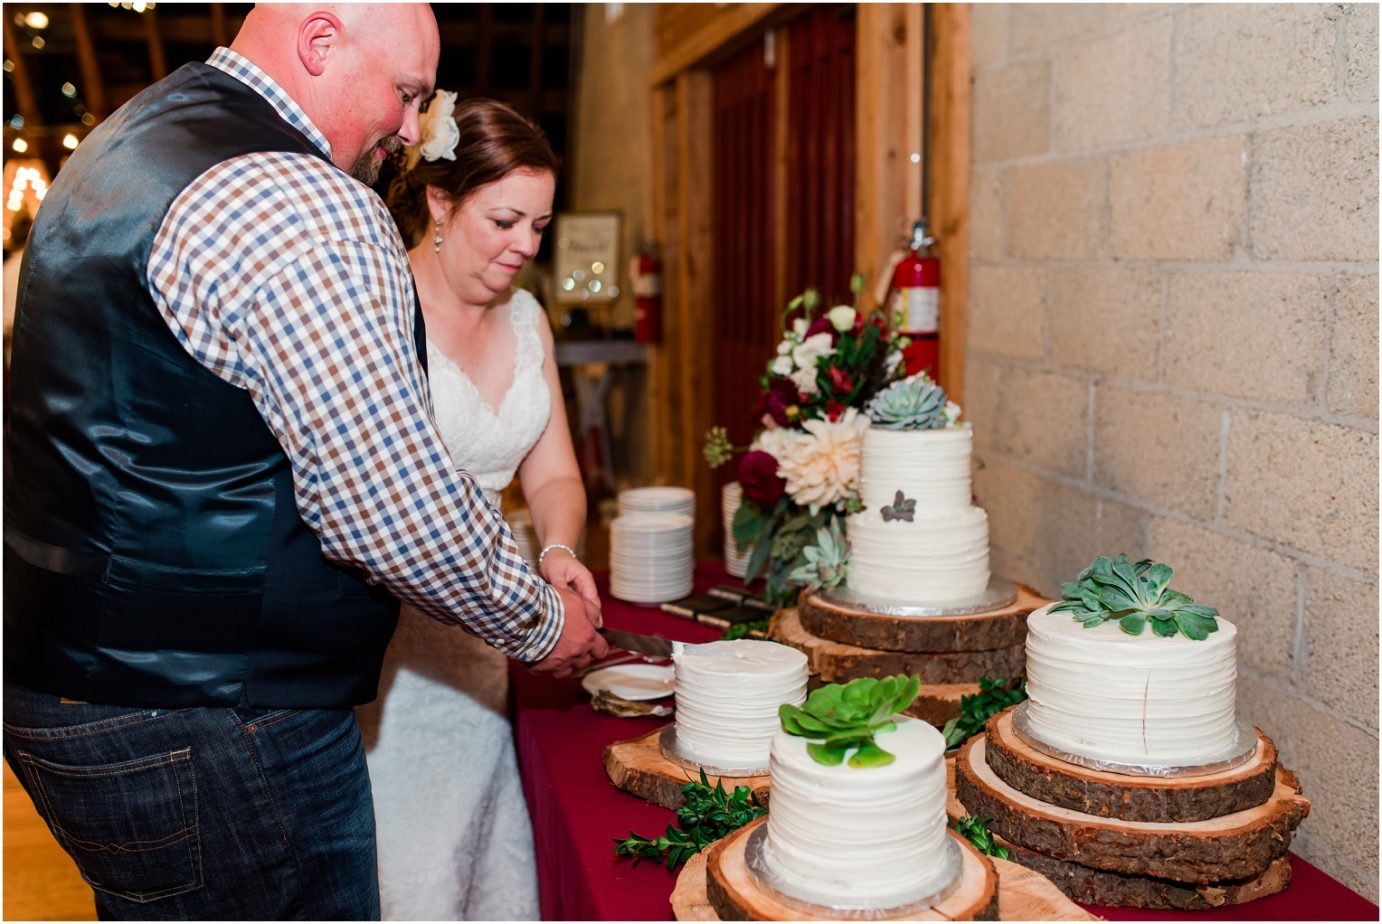 Pine River Ranch Wedding Reception Cake Cutting Photo